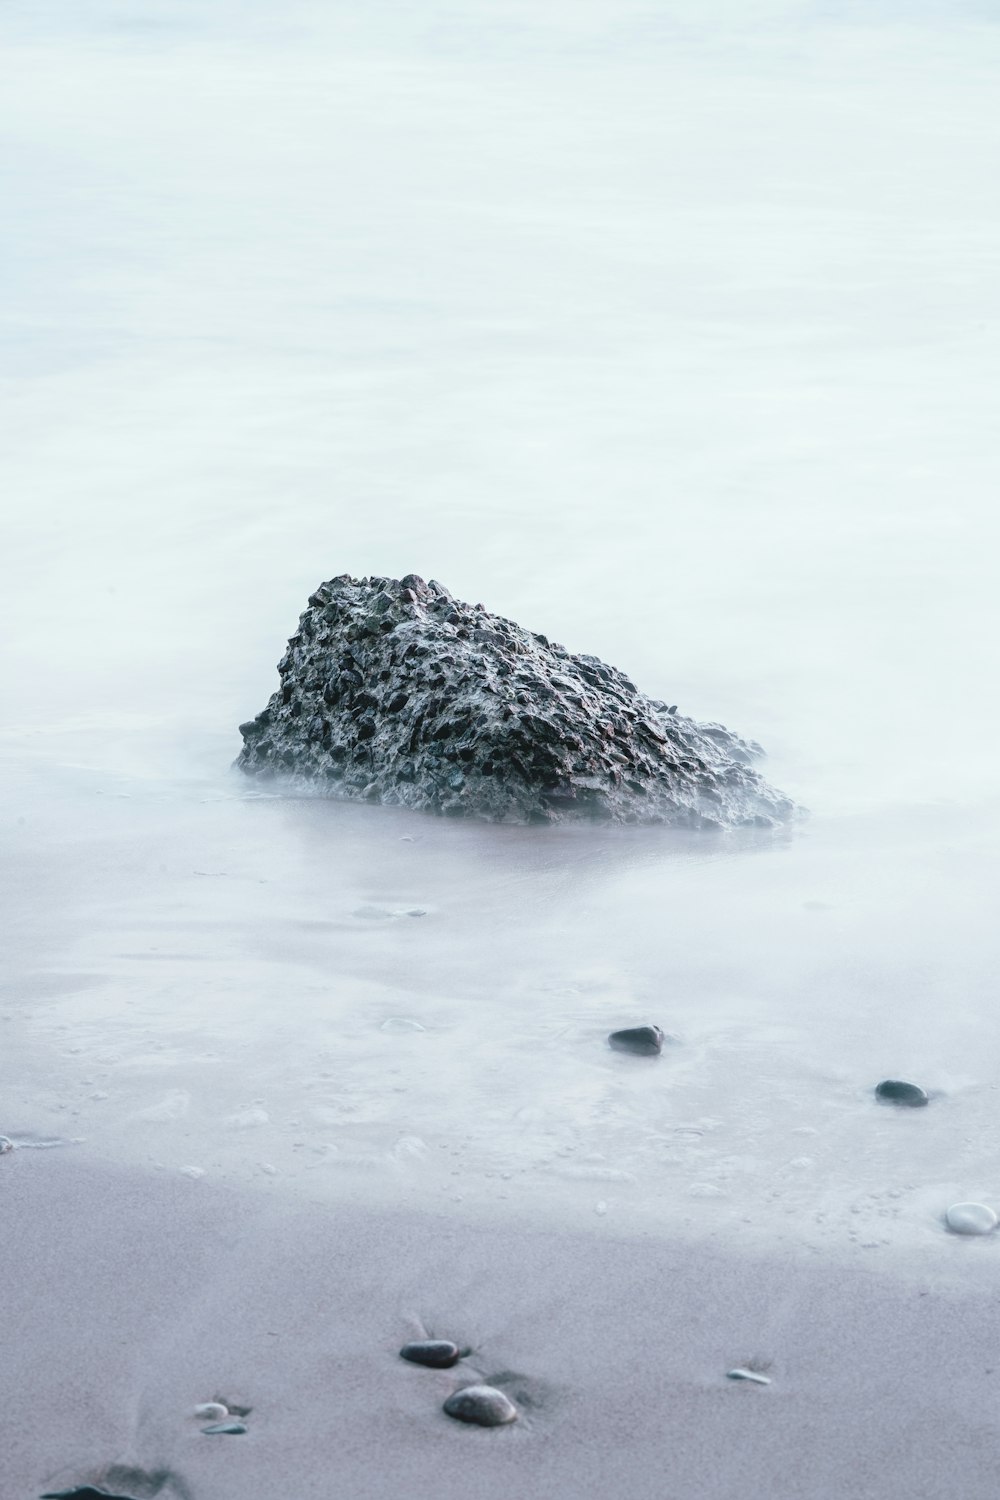 rocha na costa de areia durante o dia